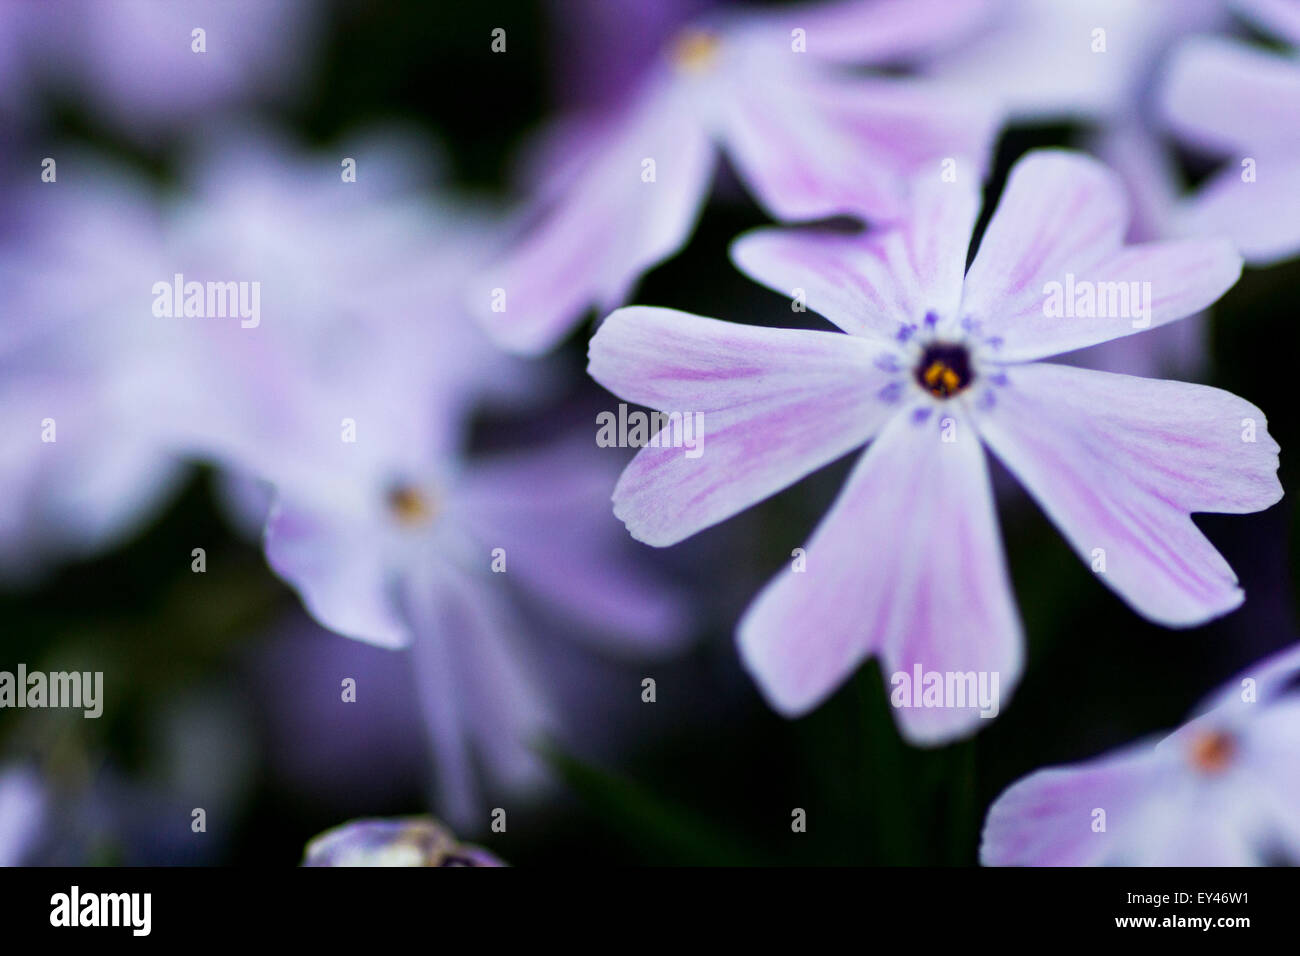 Lavender Phlox flower from Mother's garden Stock Photo